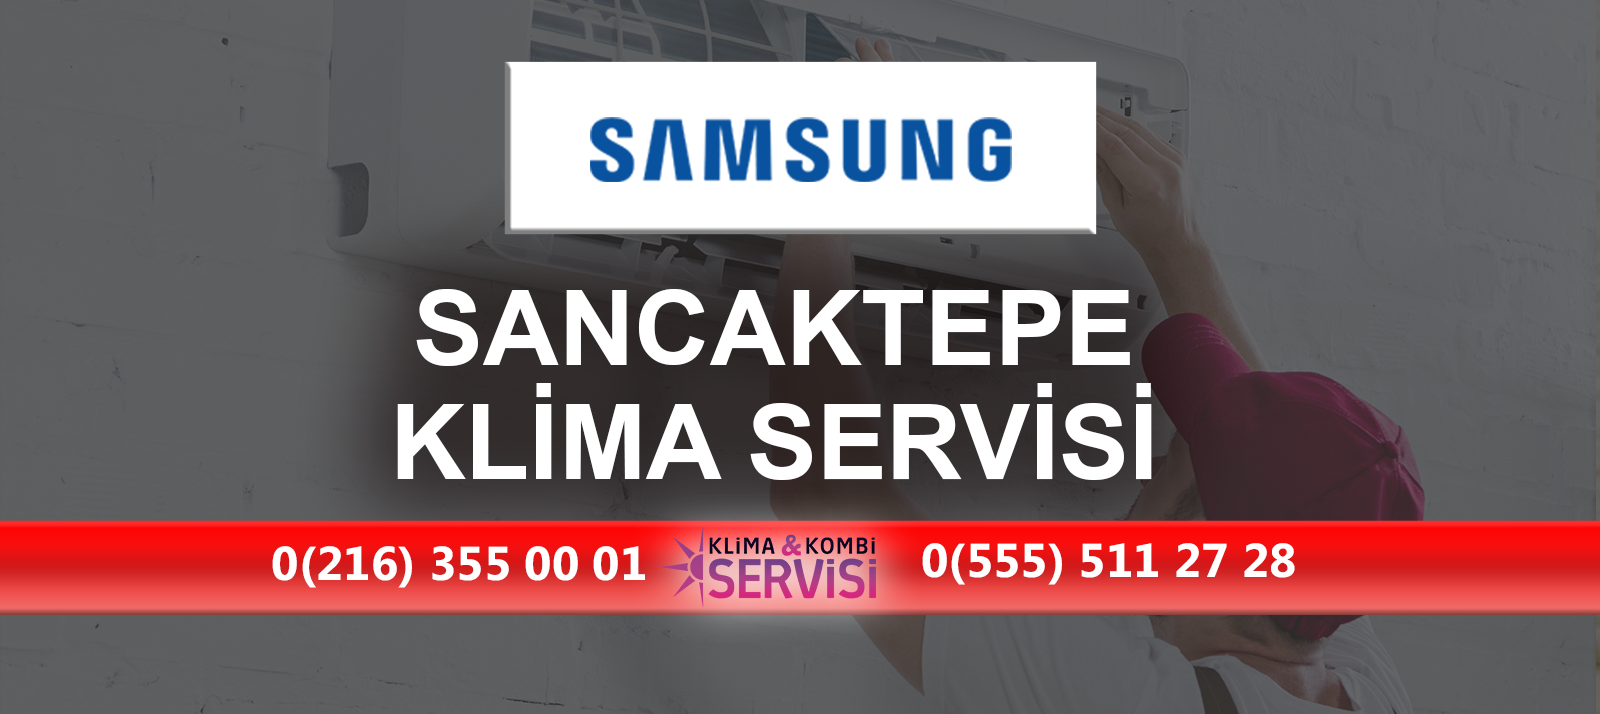 Sancaktepe Samsung Klima Servisi